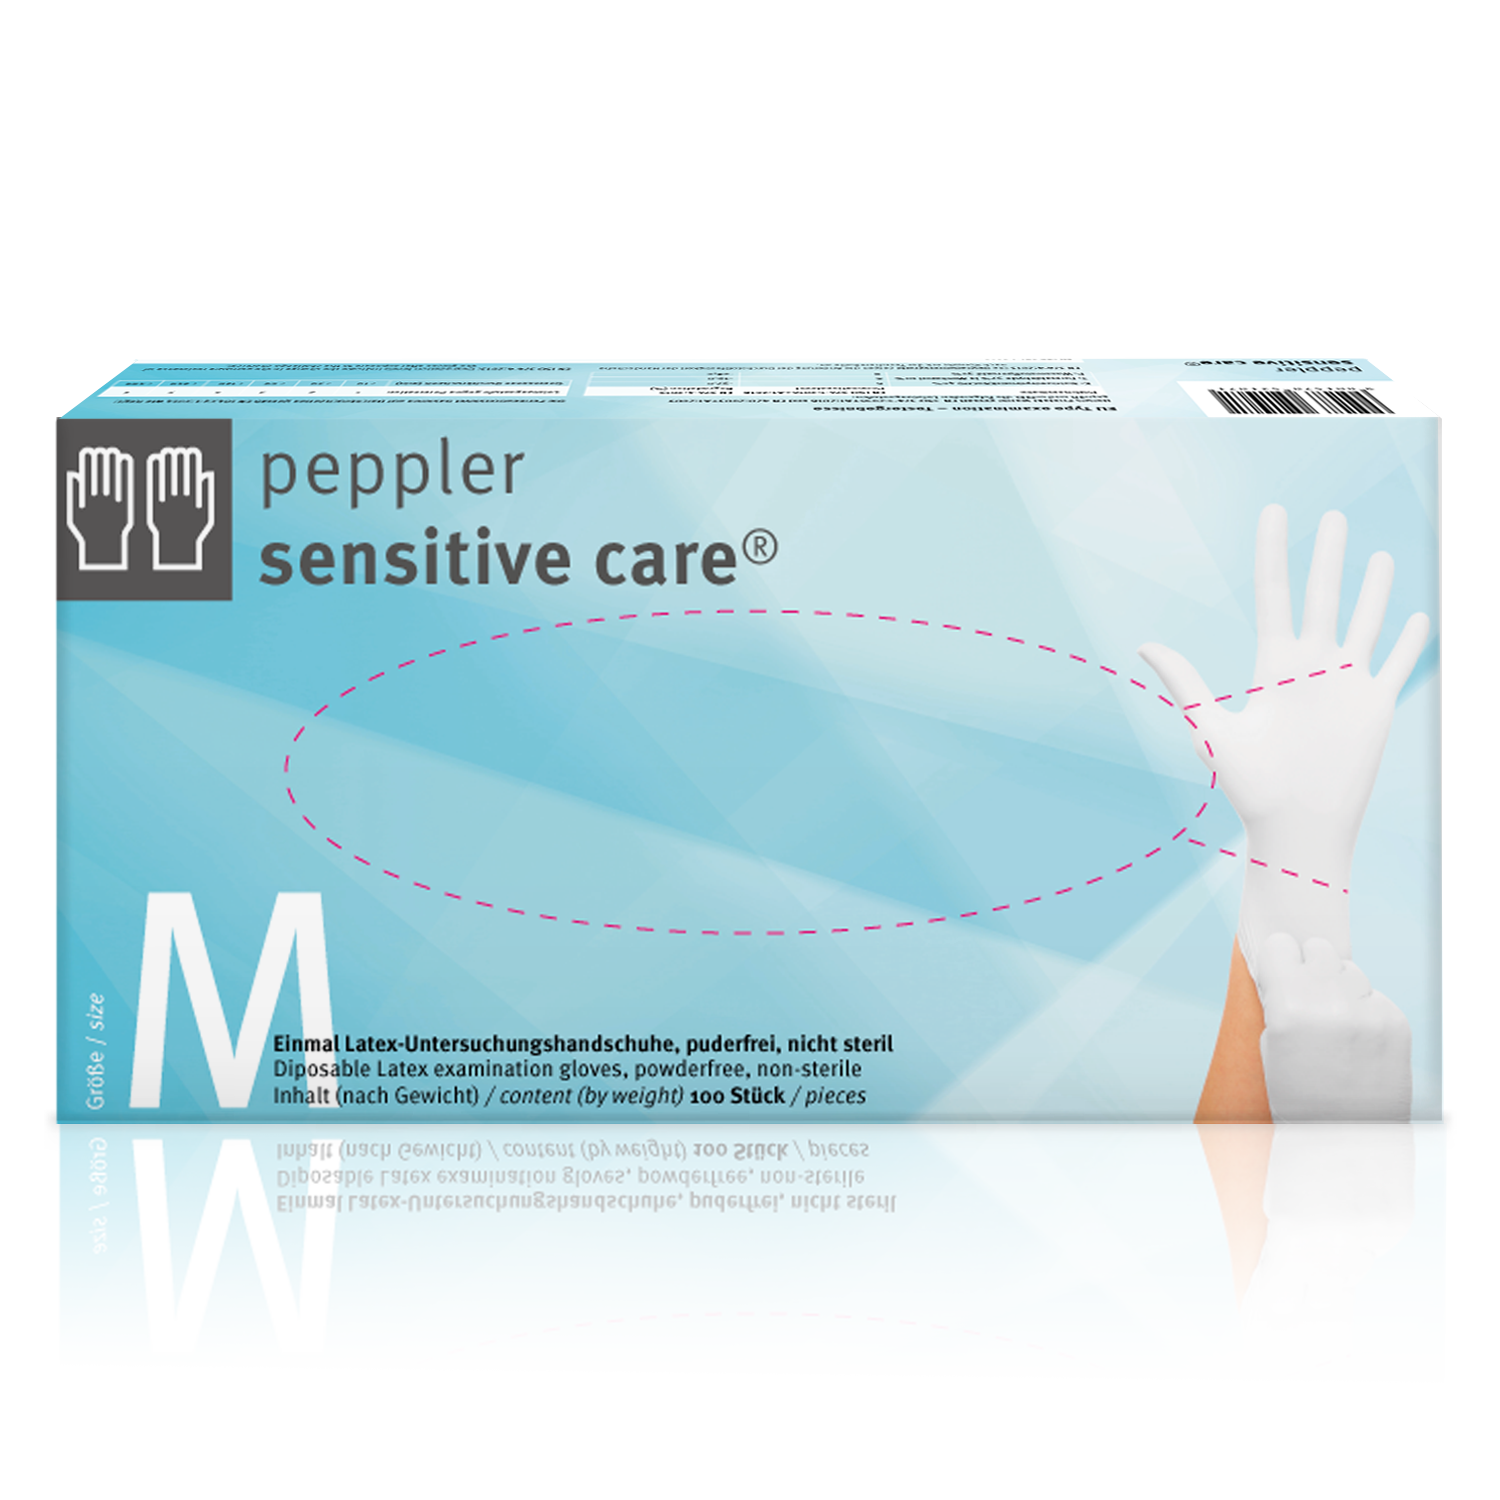 Gratis Muster peppler sensitive care - Latex Untersuchungshandschuh